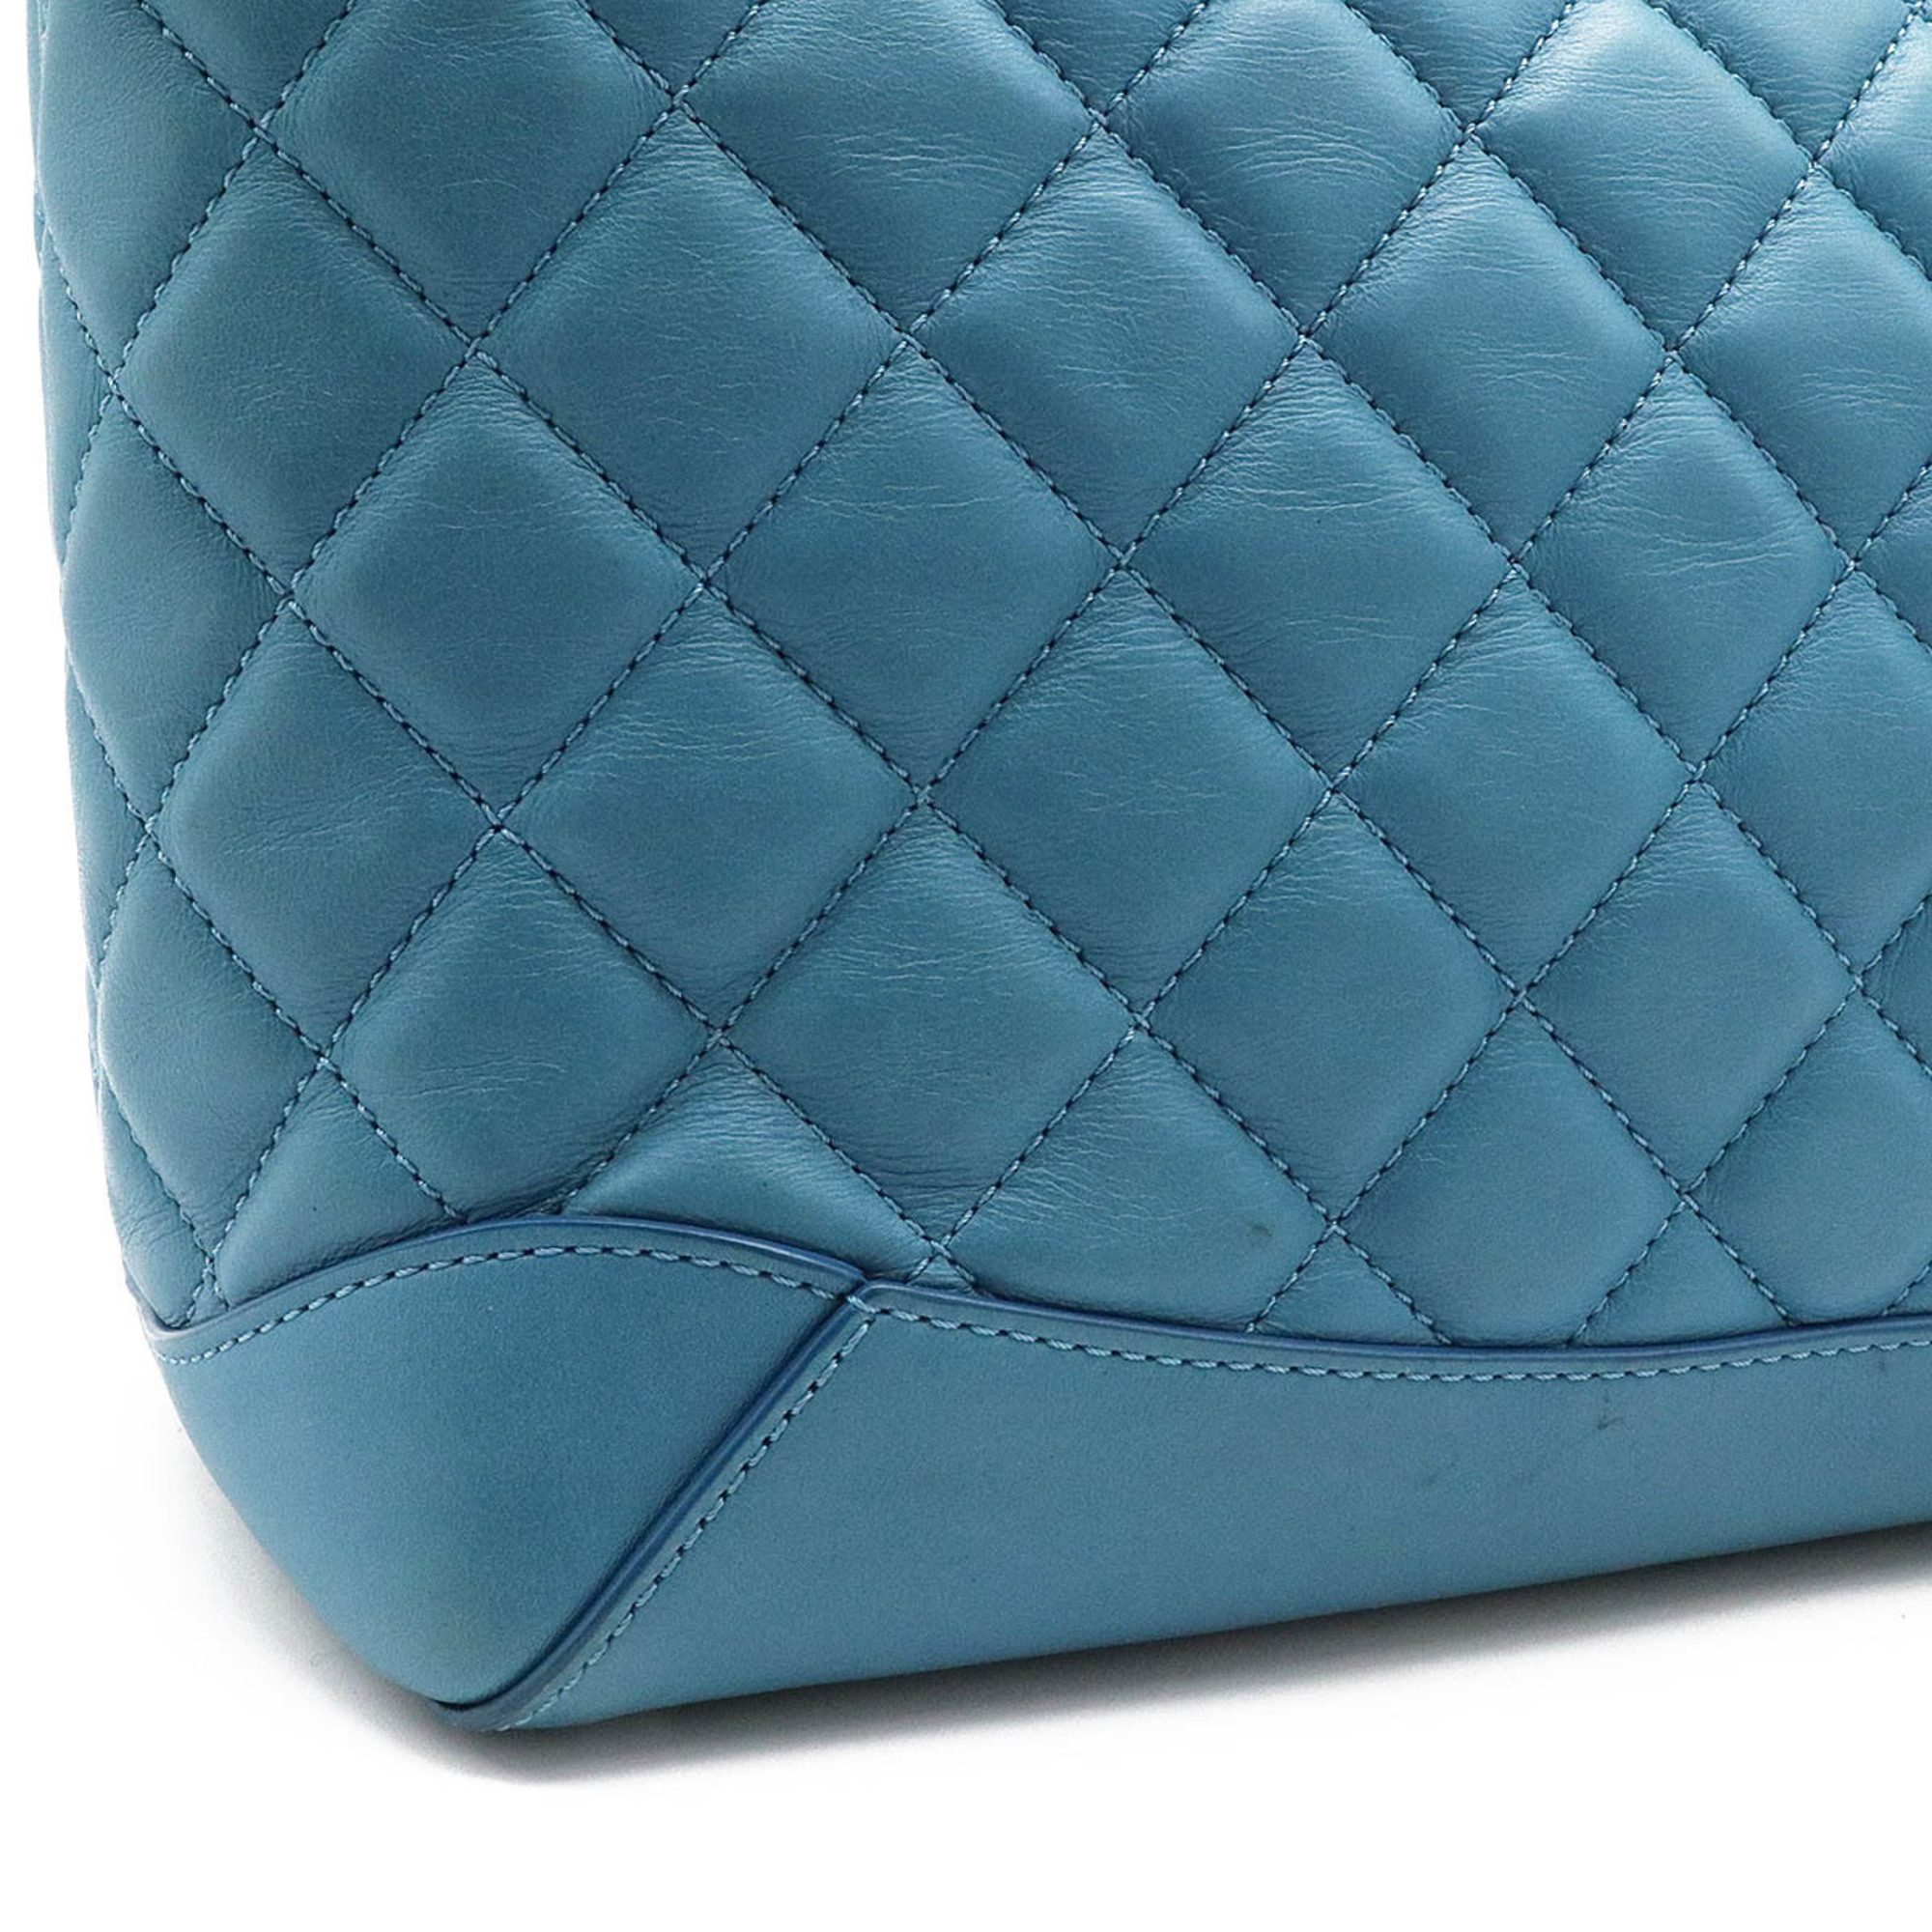 CHANEL Chanel matelasse here mark handbag tote bag shoulder chain leather blue